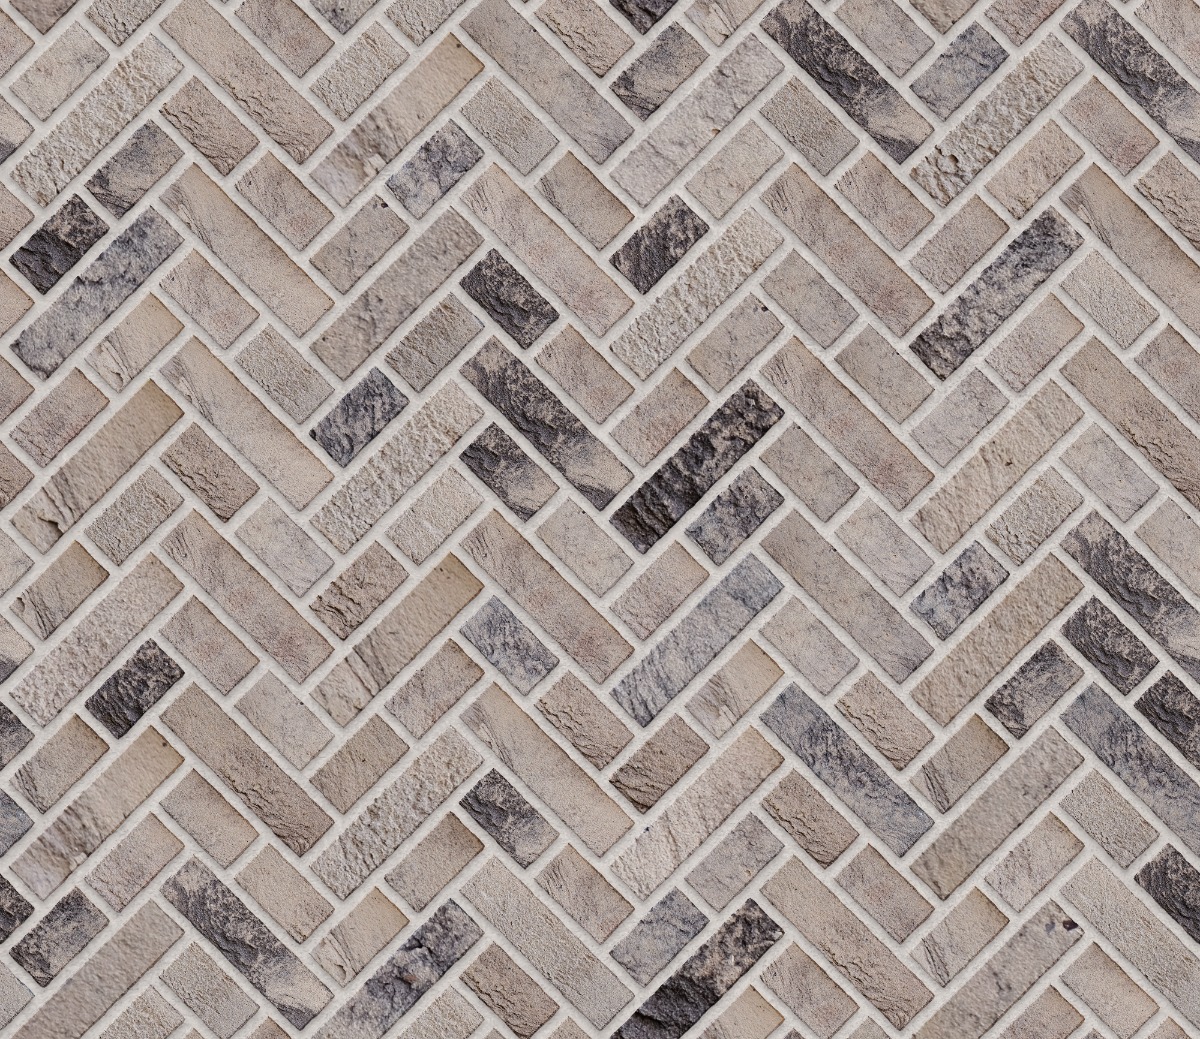 A seamless brick texture with beige brick units arranged in a Broken Herringbone pattern